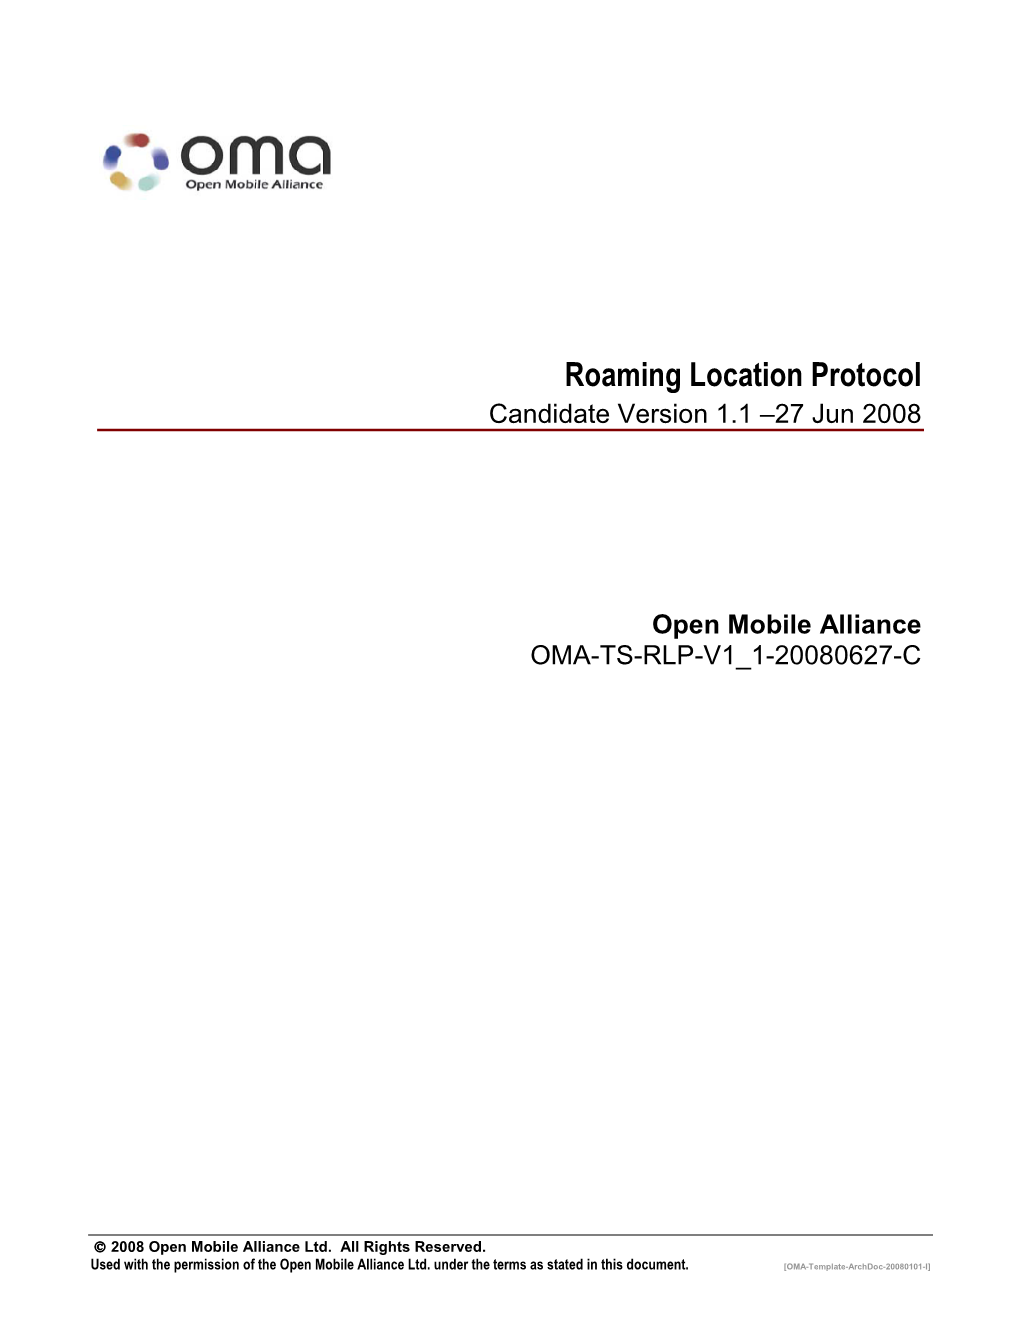 Roaming Location Protocol Candidate Version 1.1 –27 Jun 2008